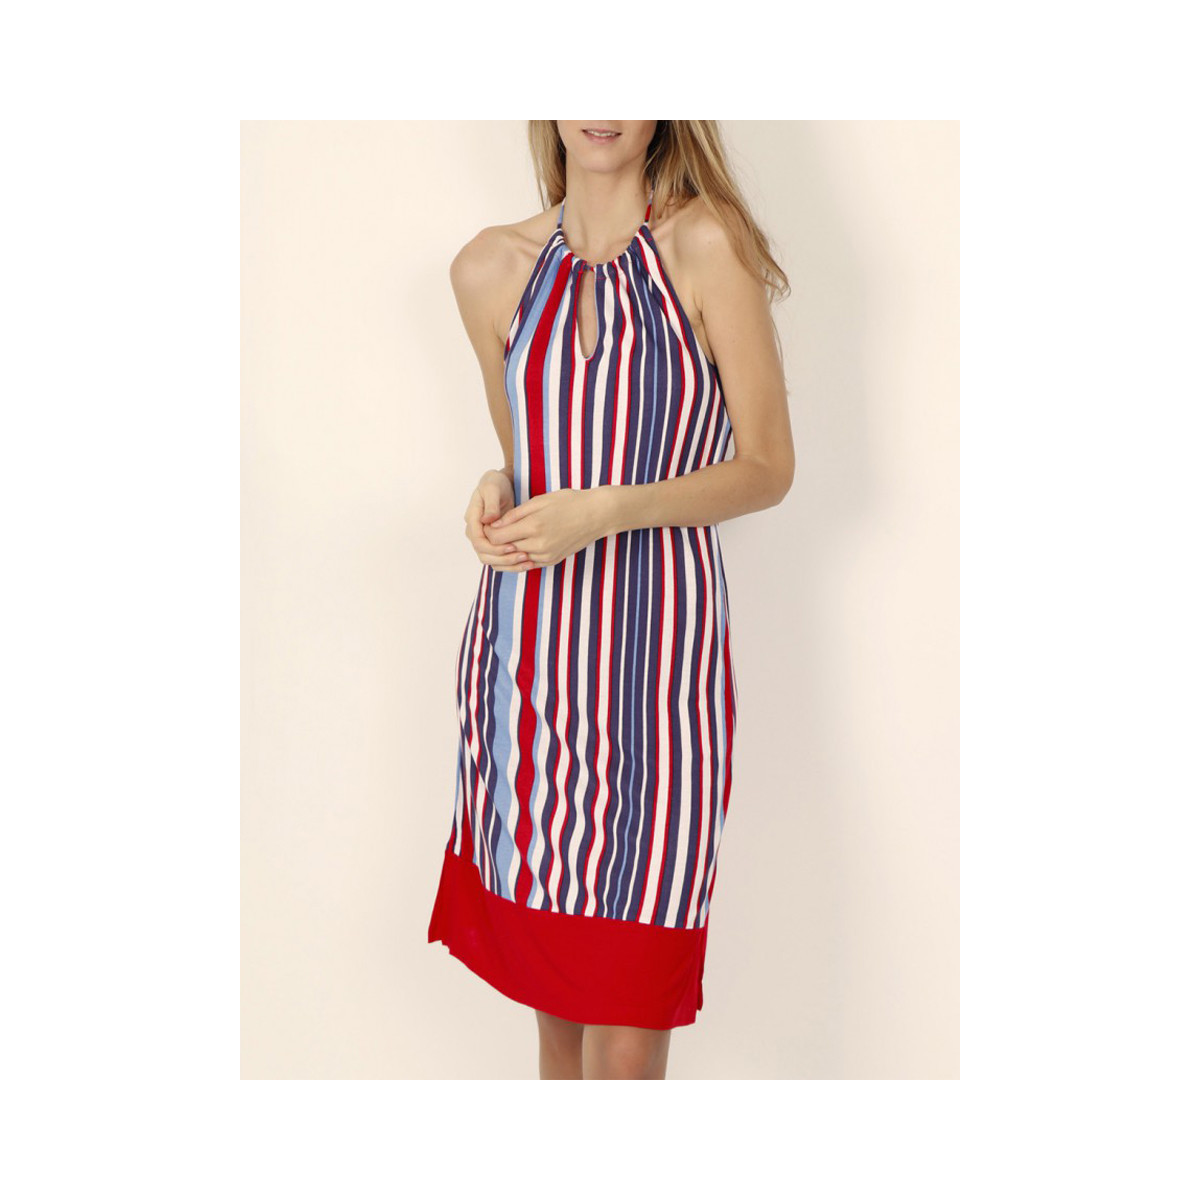 Kleidung Damen Kleider Admas Sommer-Trägerkleid Elegant Stripes rot Rot